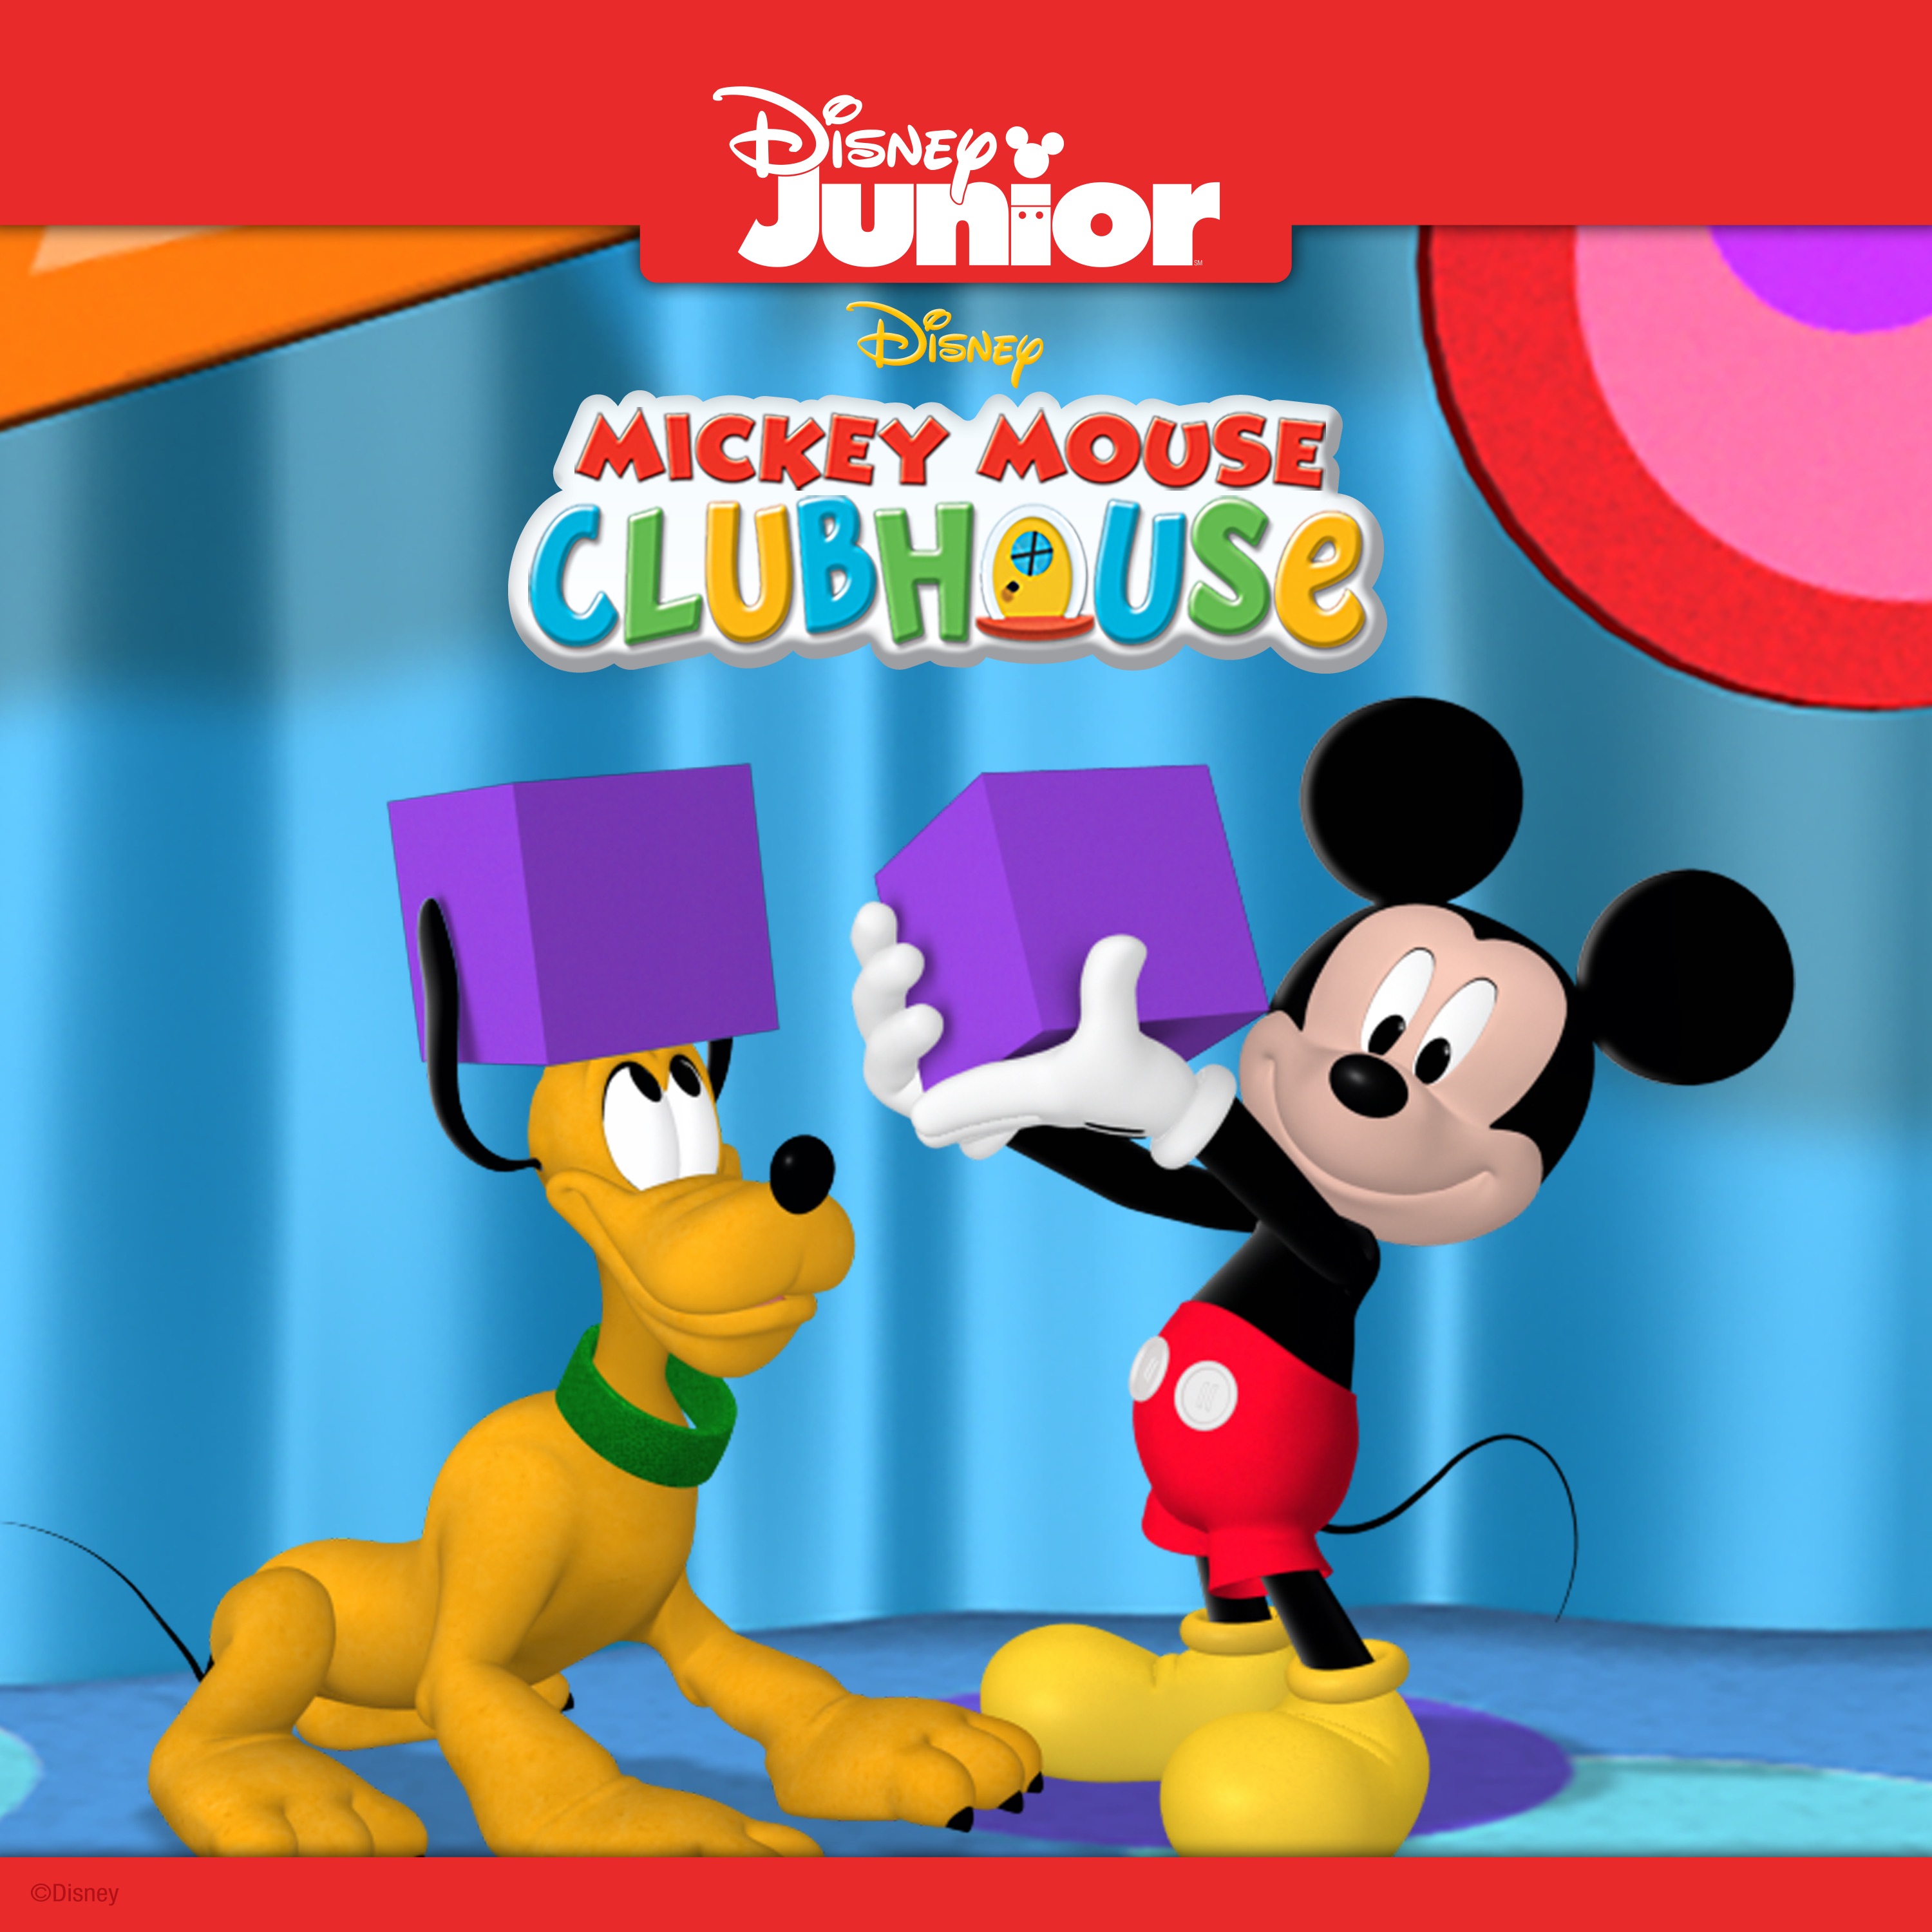 Mickey mouse clubhouse season 2 episode 17